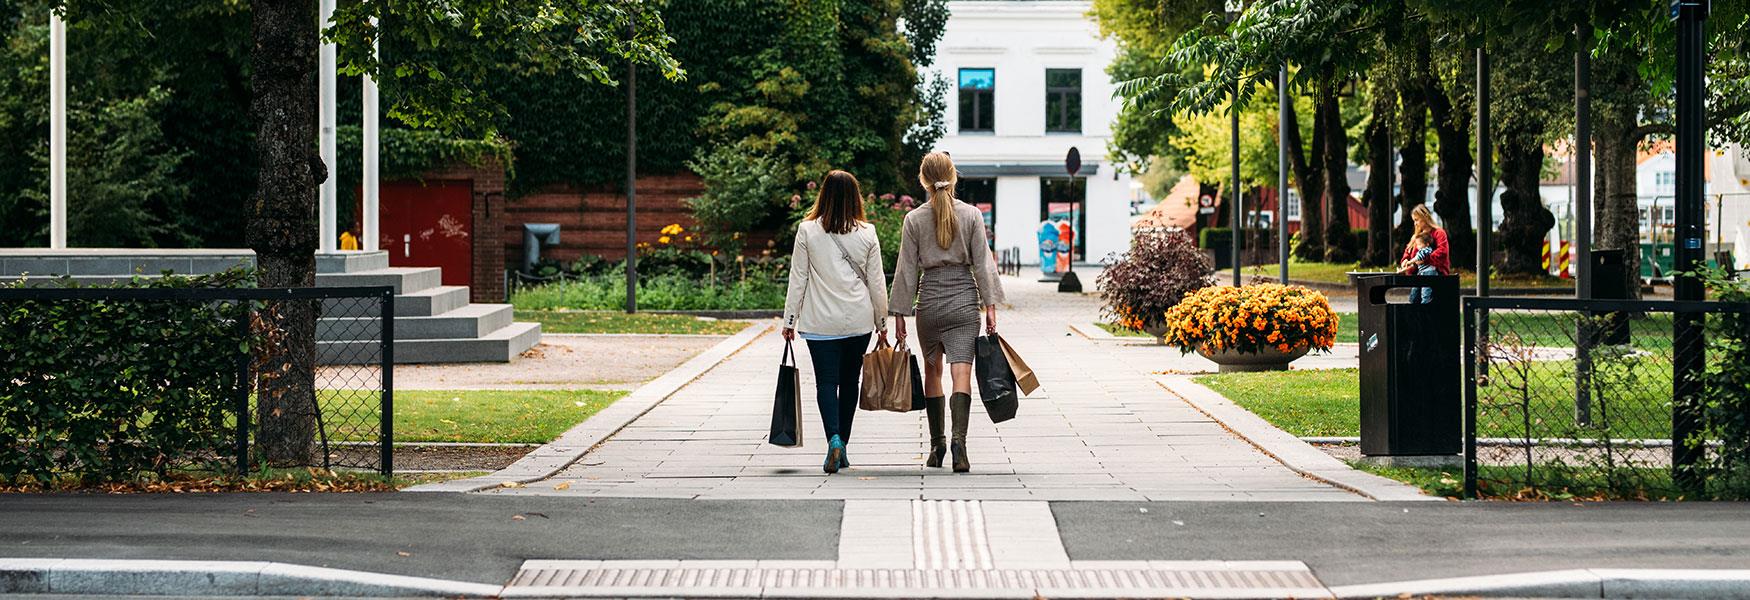 2 girls on a shopping trip in Porsgrunn